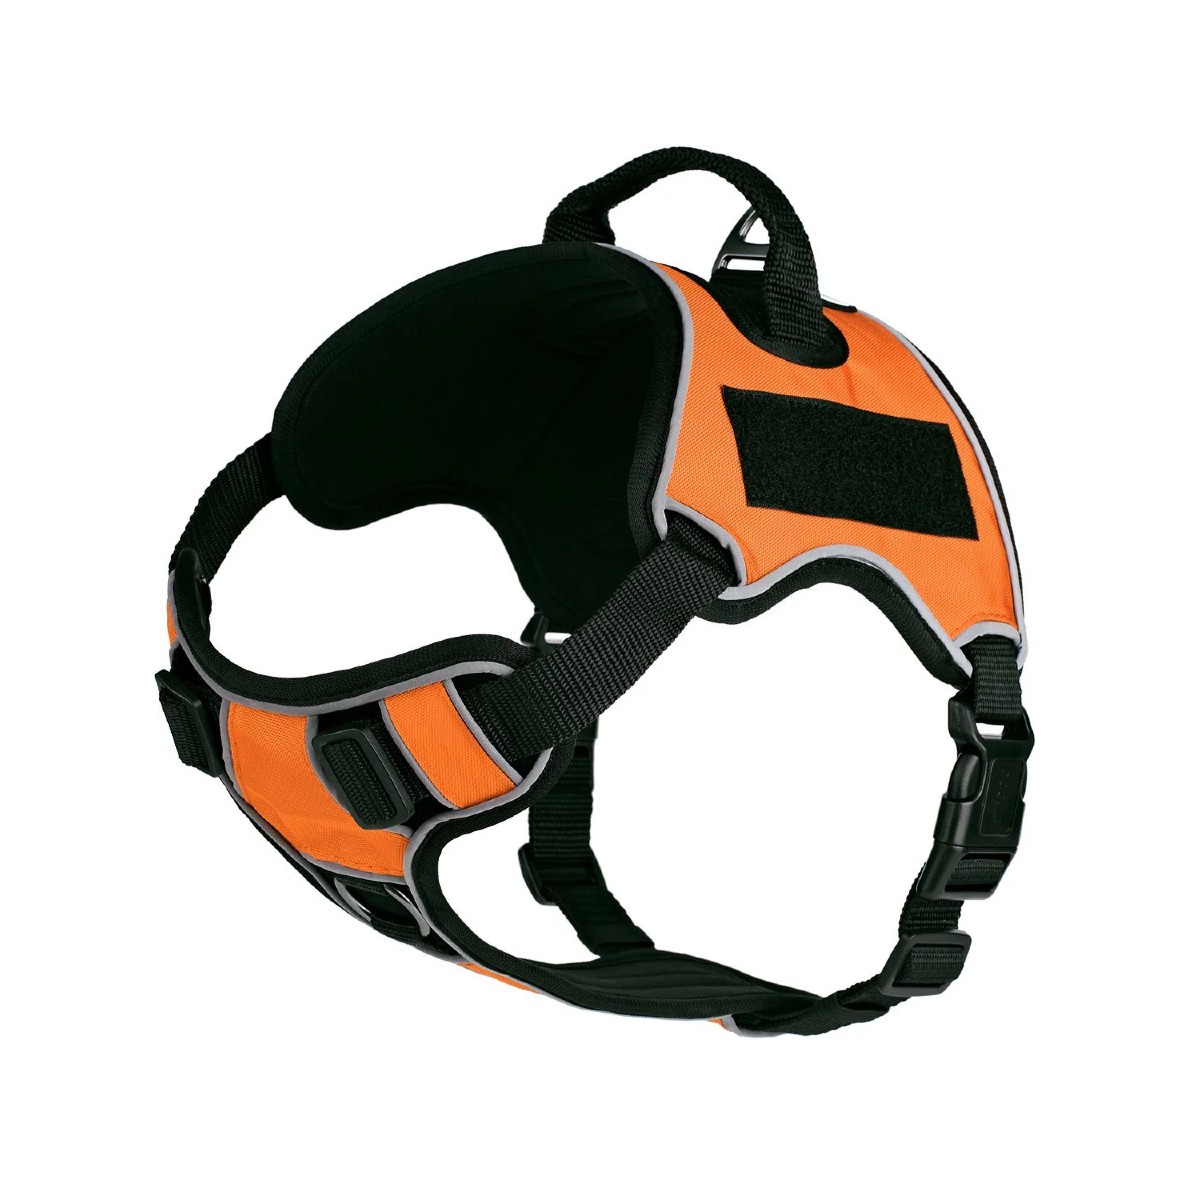 Dogline Quest Multipurpose No Pull Dog Harness - Orange